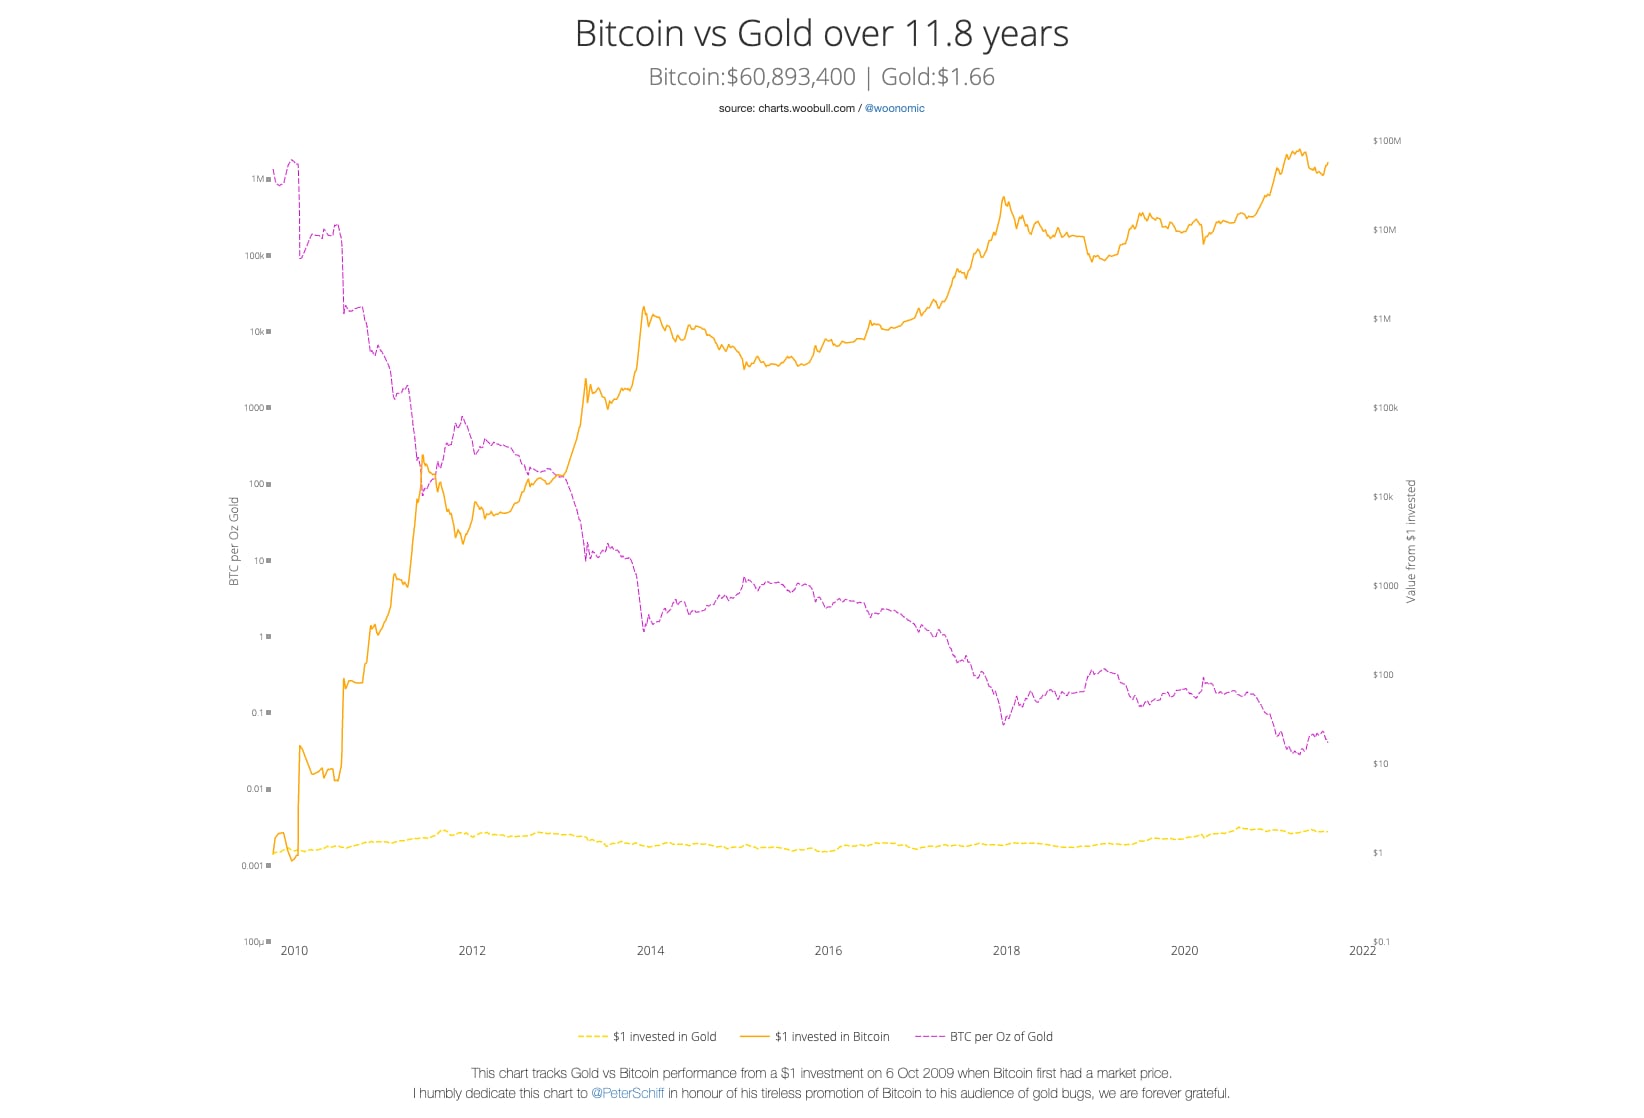 Bitcoin v Gold